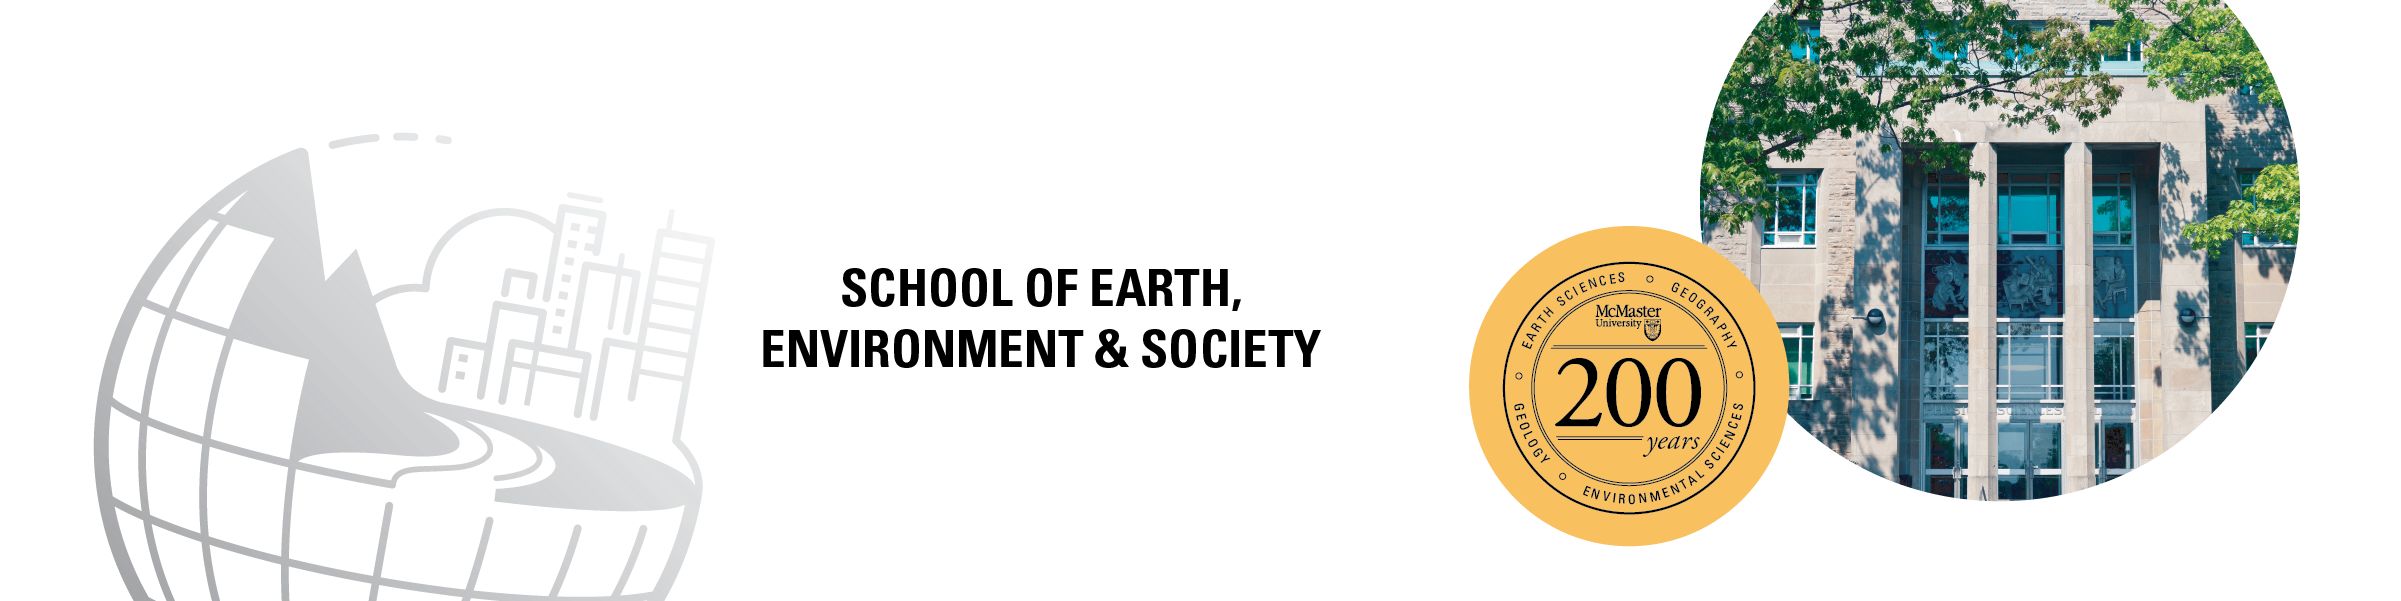 McMaster School of Earth, Environment & Society